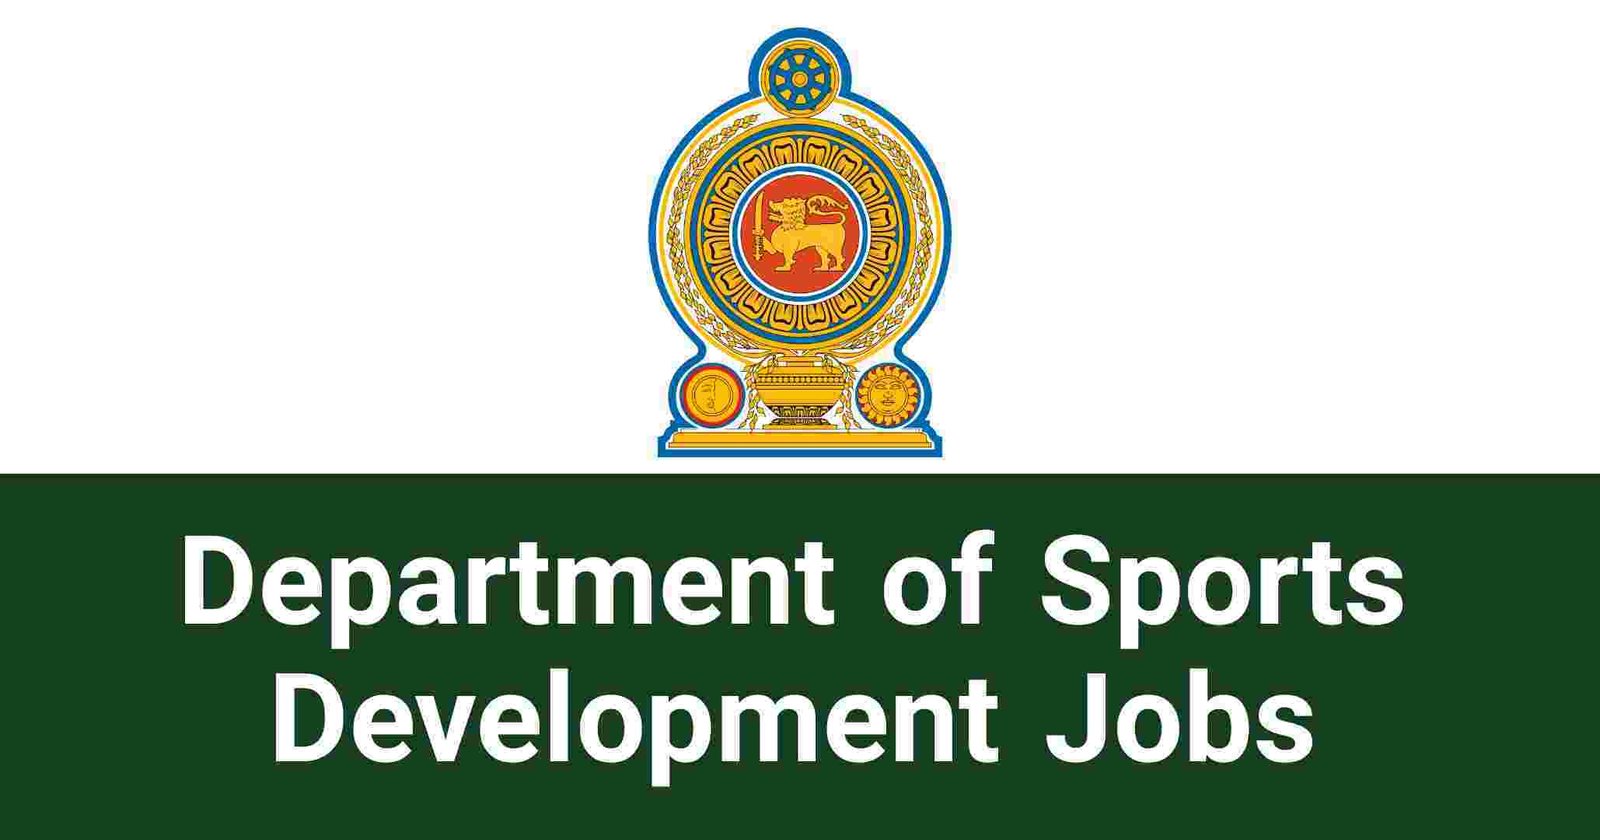 Department of Sports Development Jobs Vacancies